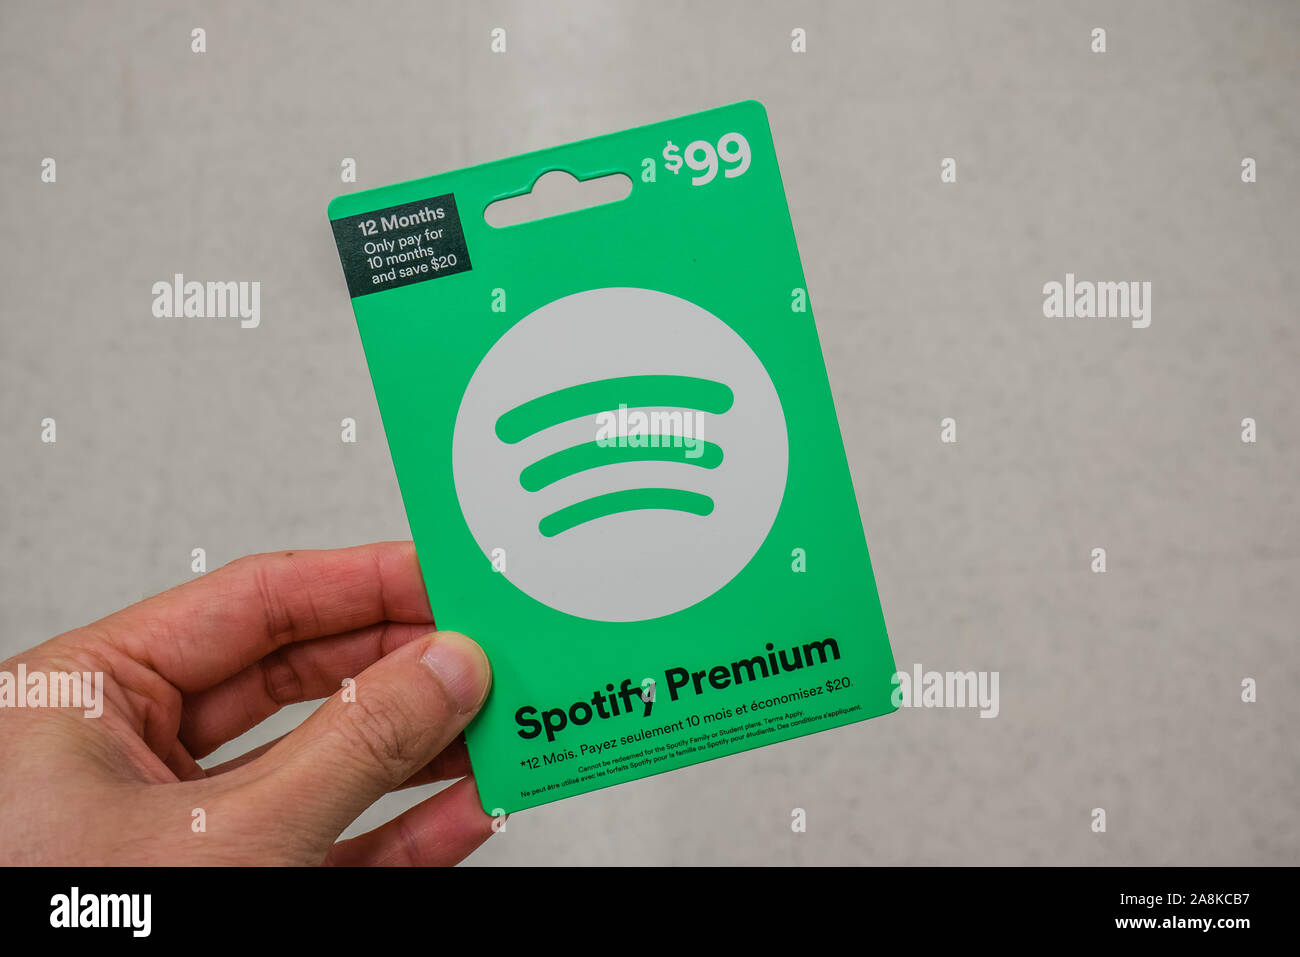 spotify premium gift card Stock Photo - Alamy